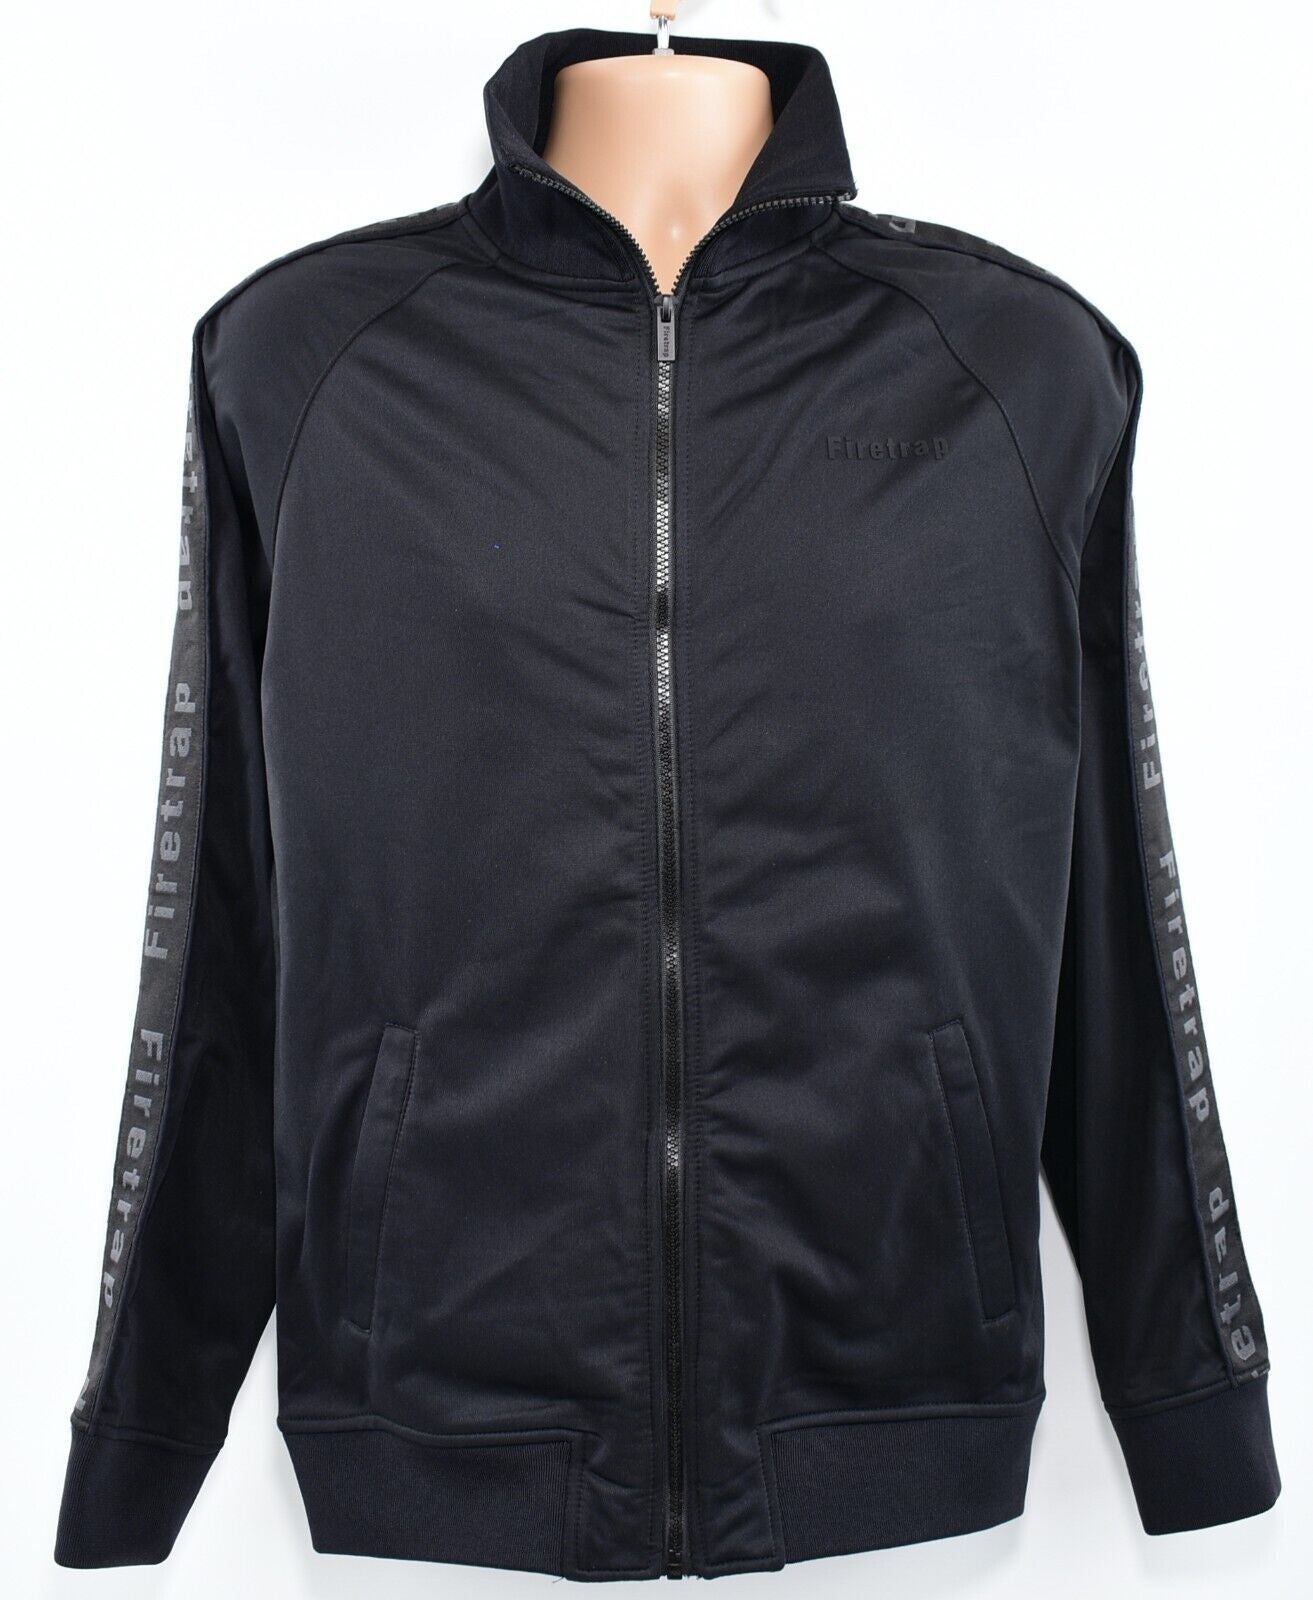 FIRETRAP Men's Full Zip Track Jacket, Track Suit Top,  Black, size MEDIUM